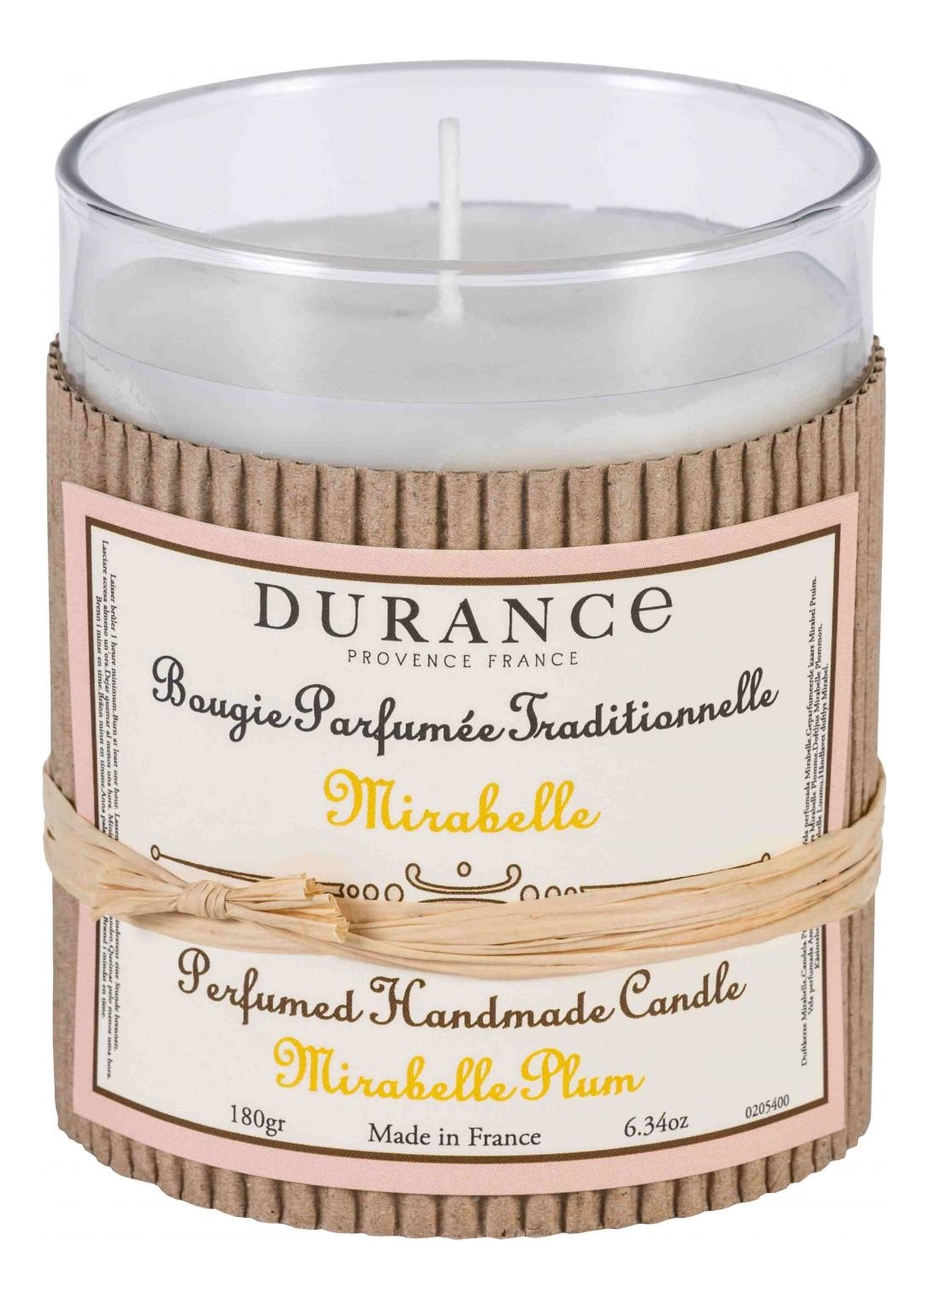 Ароматическая свеча Perfumed Handmade Candle Mirabelle Plum 180г ароматическая свеча perfumed handmade candle soft peony 180г нежный пион